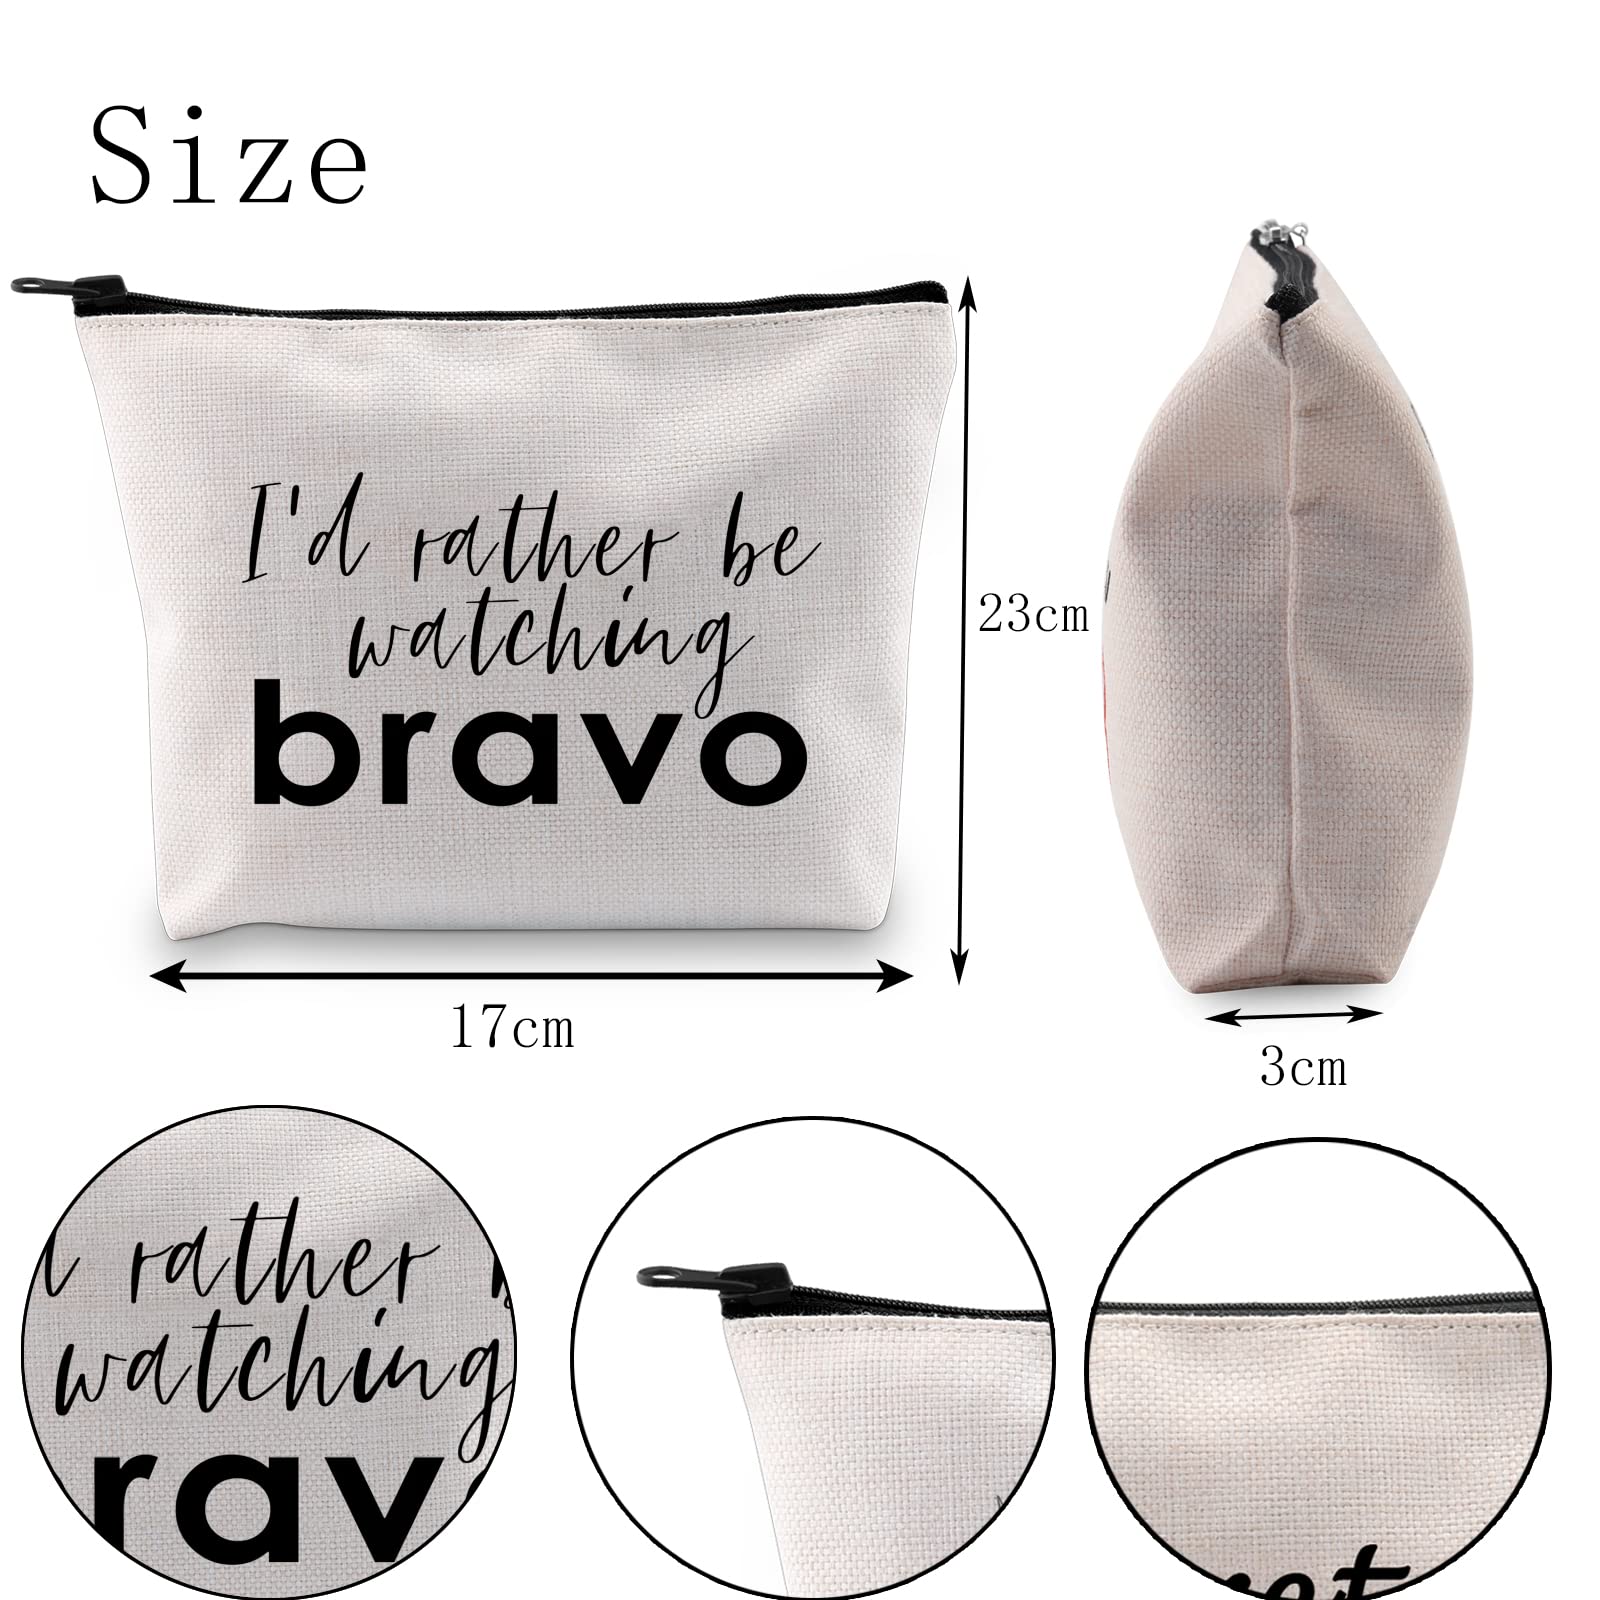 POFULL Bravo TV Show Inspired Gift I'd Rather Be Watching Bravo Travel Bag for Mom Sister (watching bravo bag)